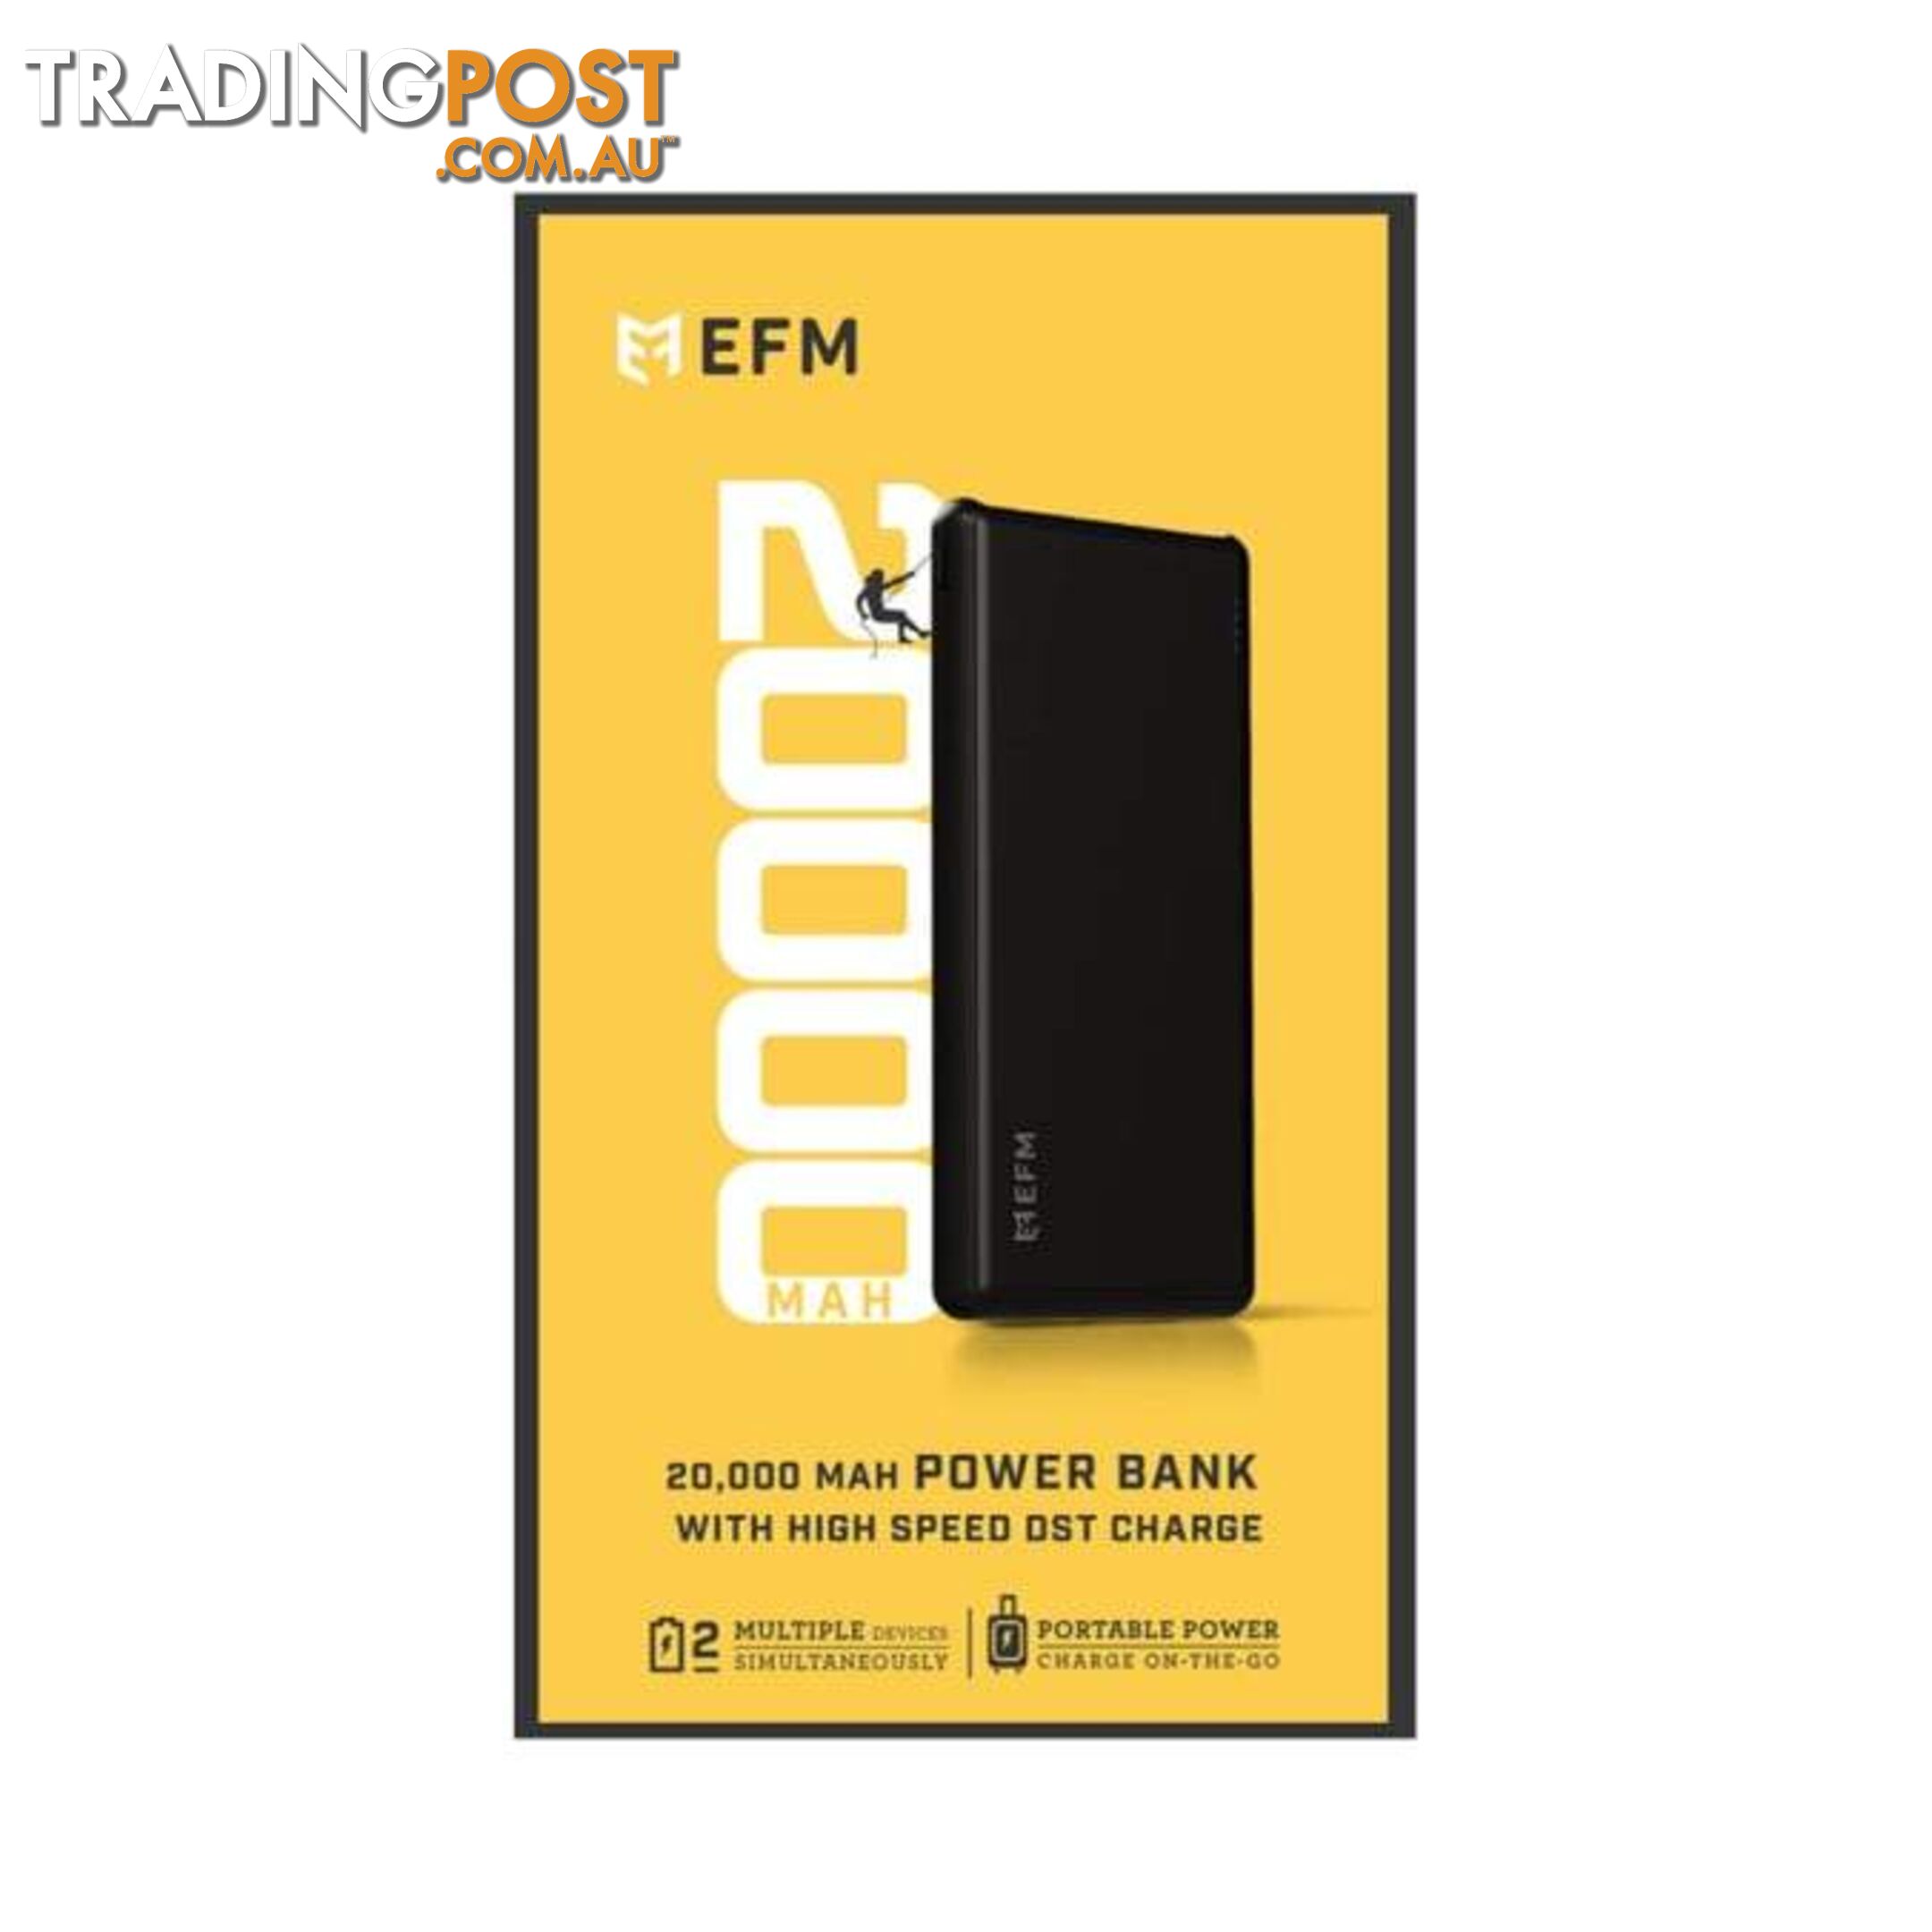 EFM 20000mAh Power Bank With Micro USB Cable - EFM - 9319655062617